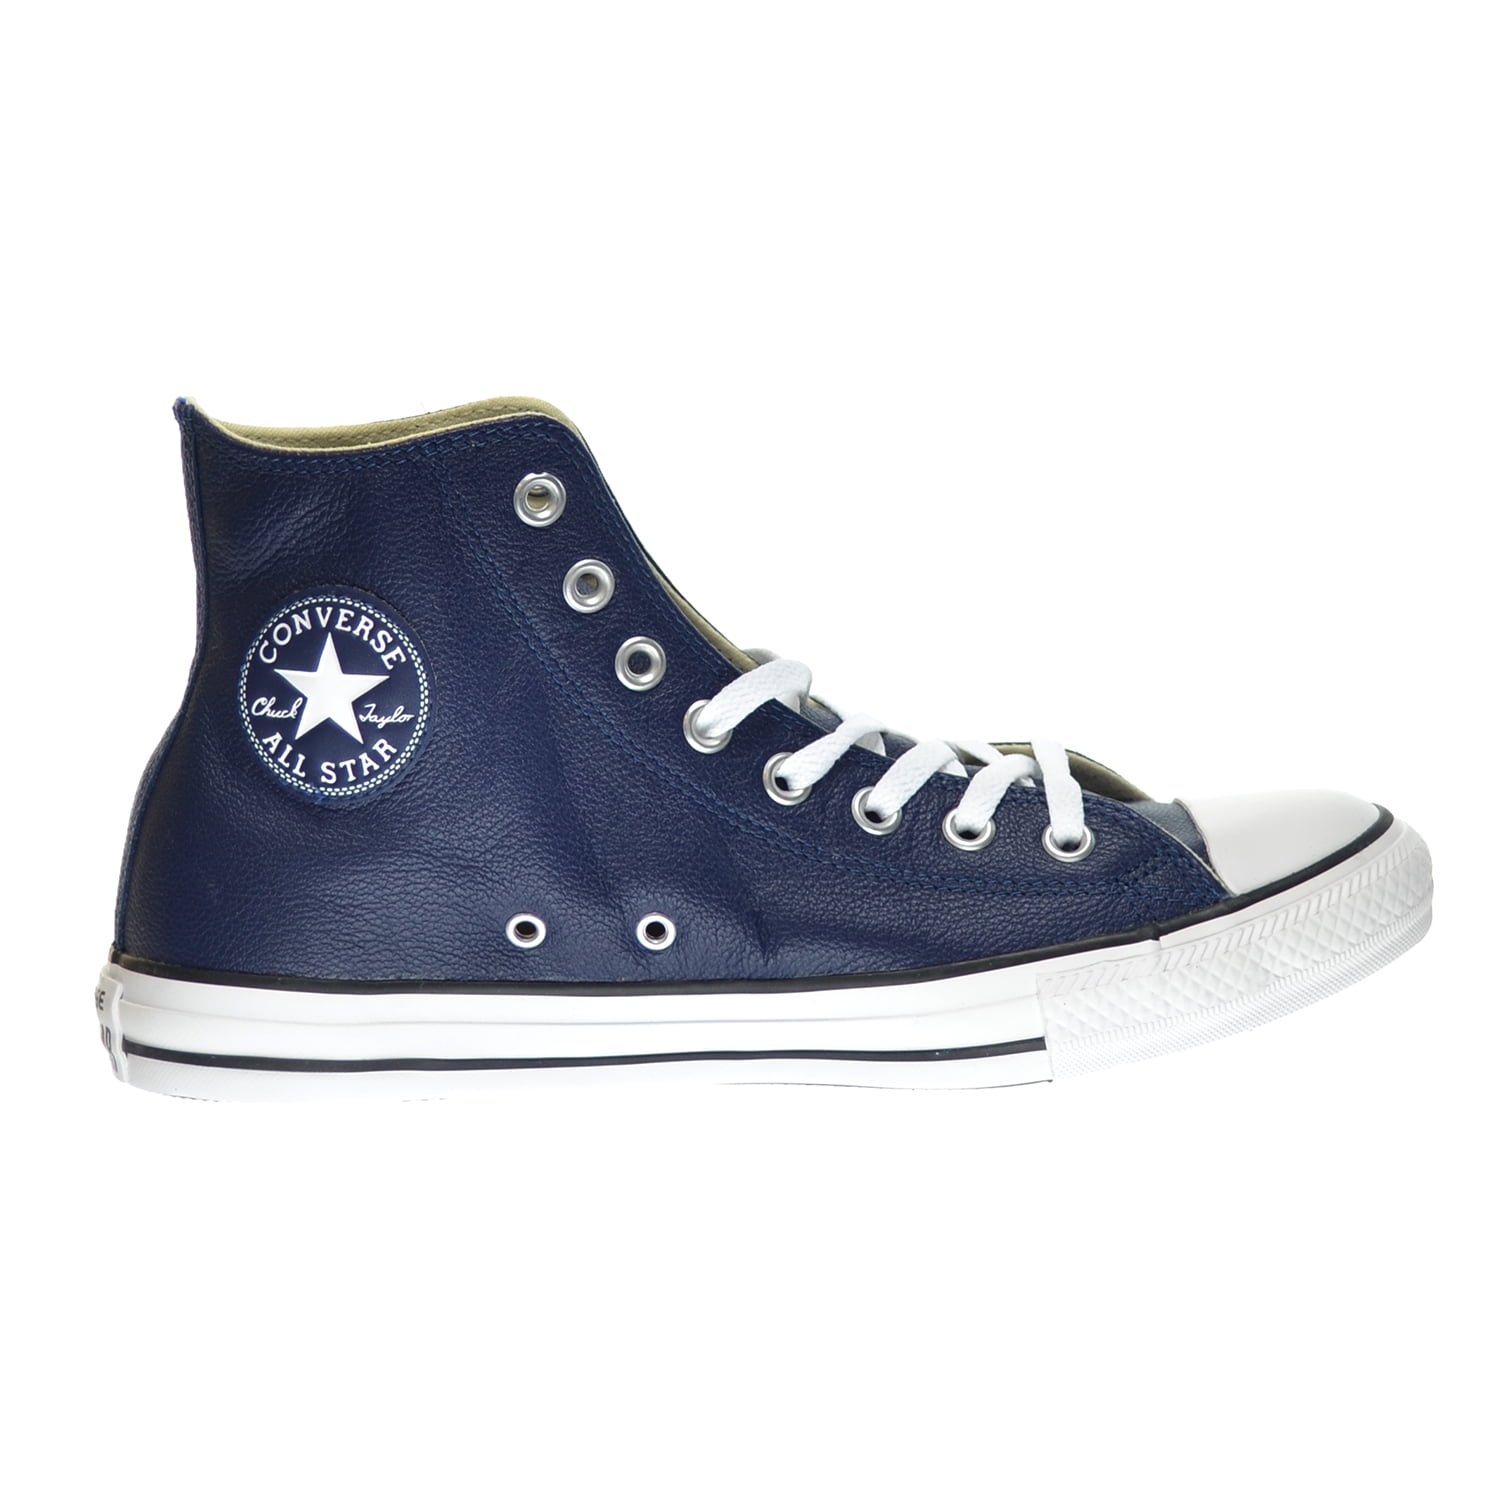 Converse 14 Taylor All Star High Nighttime Men's Shoes Blue/White 149490c - Walmart.com